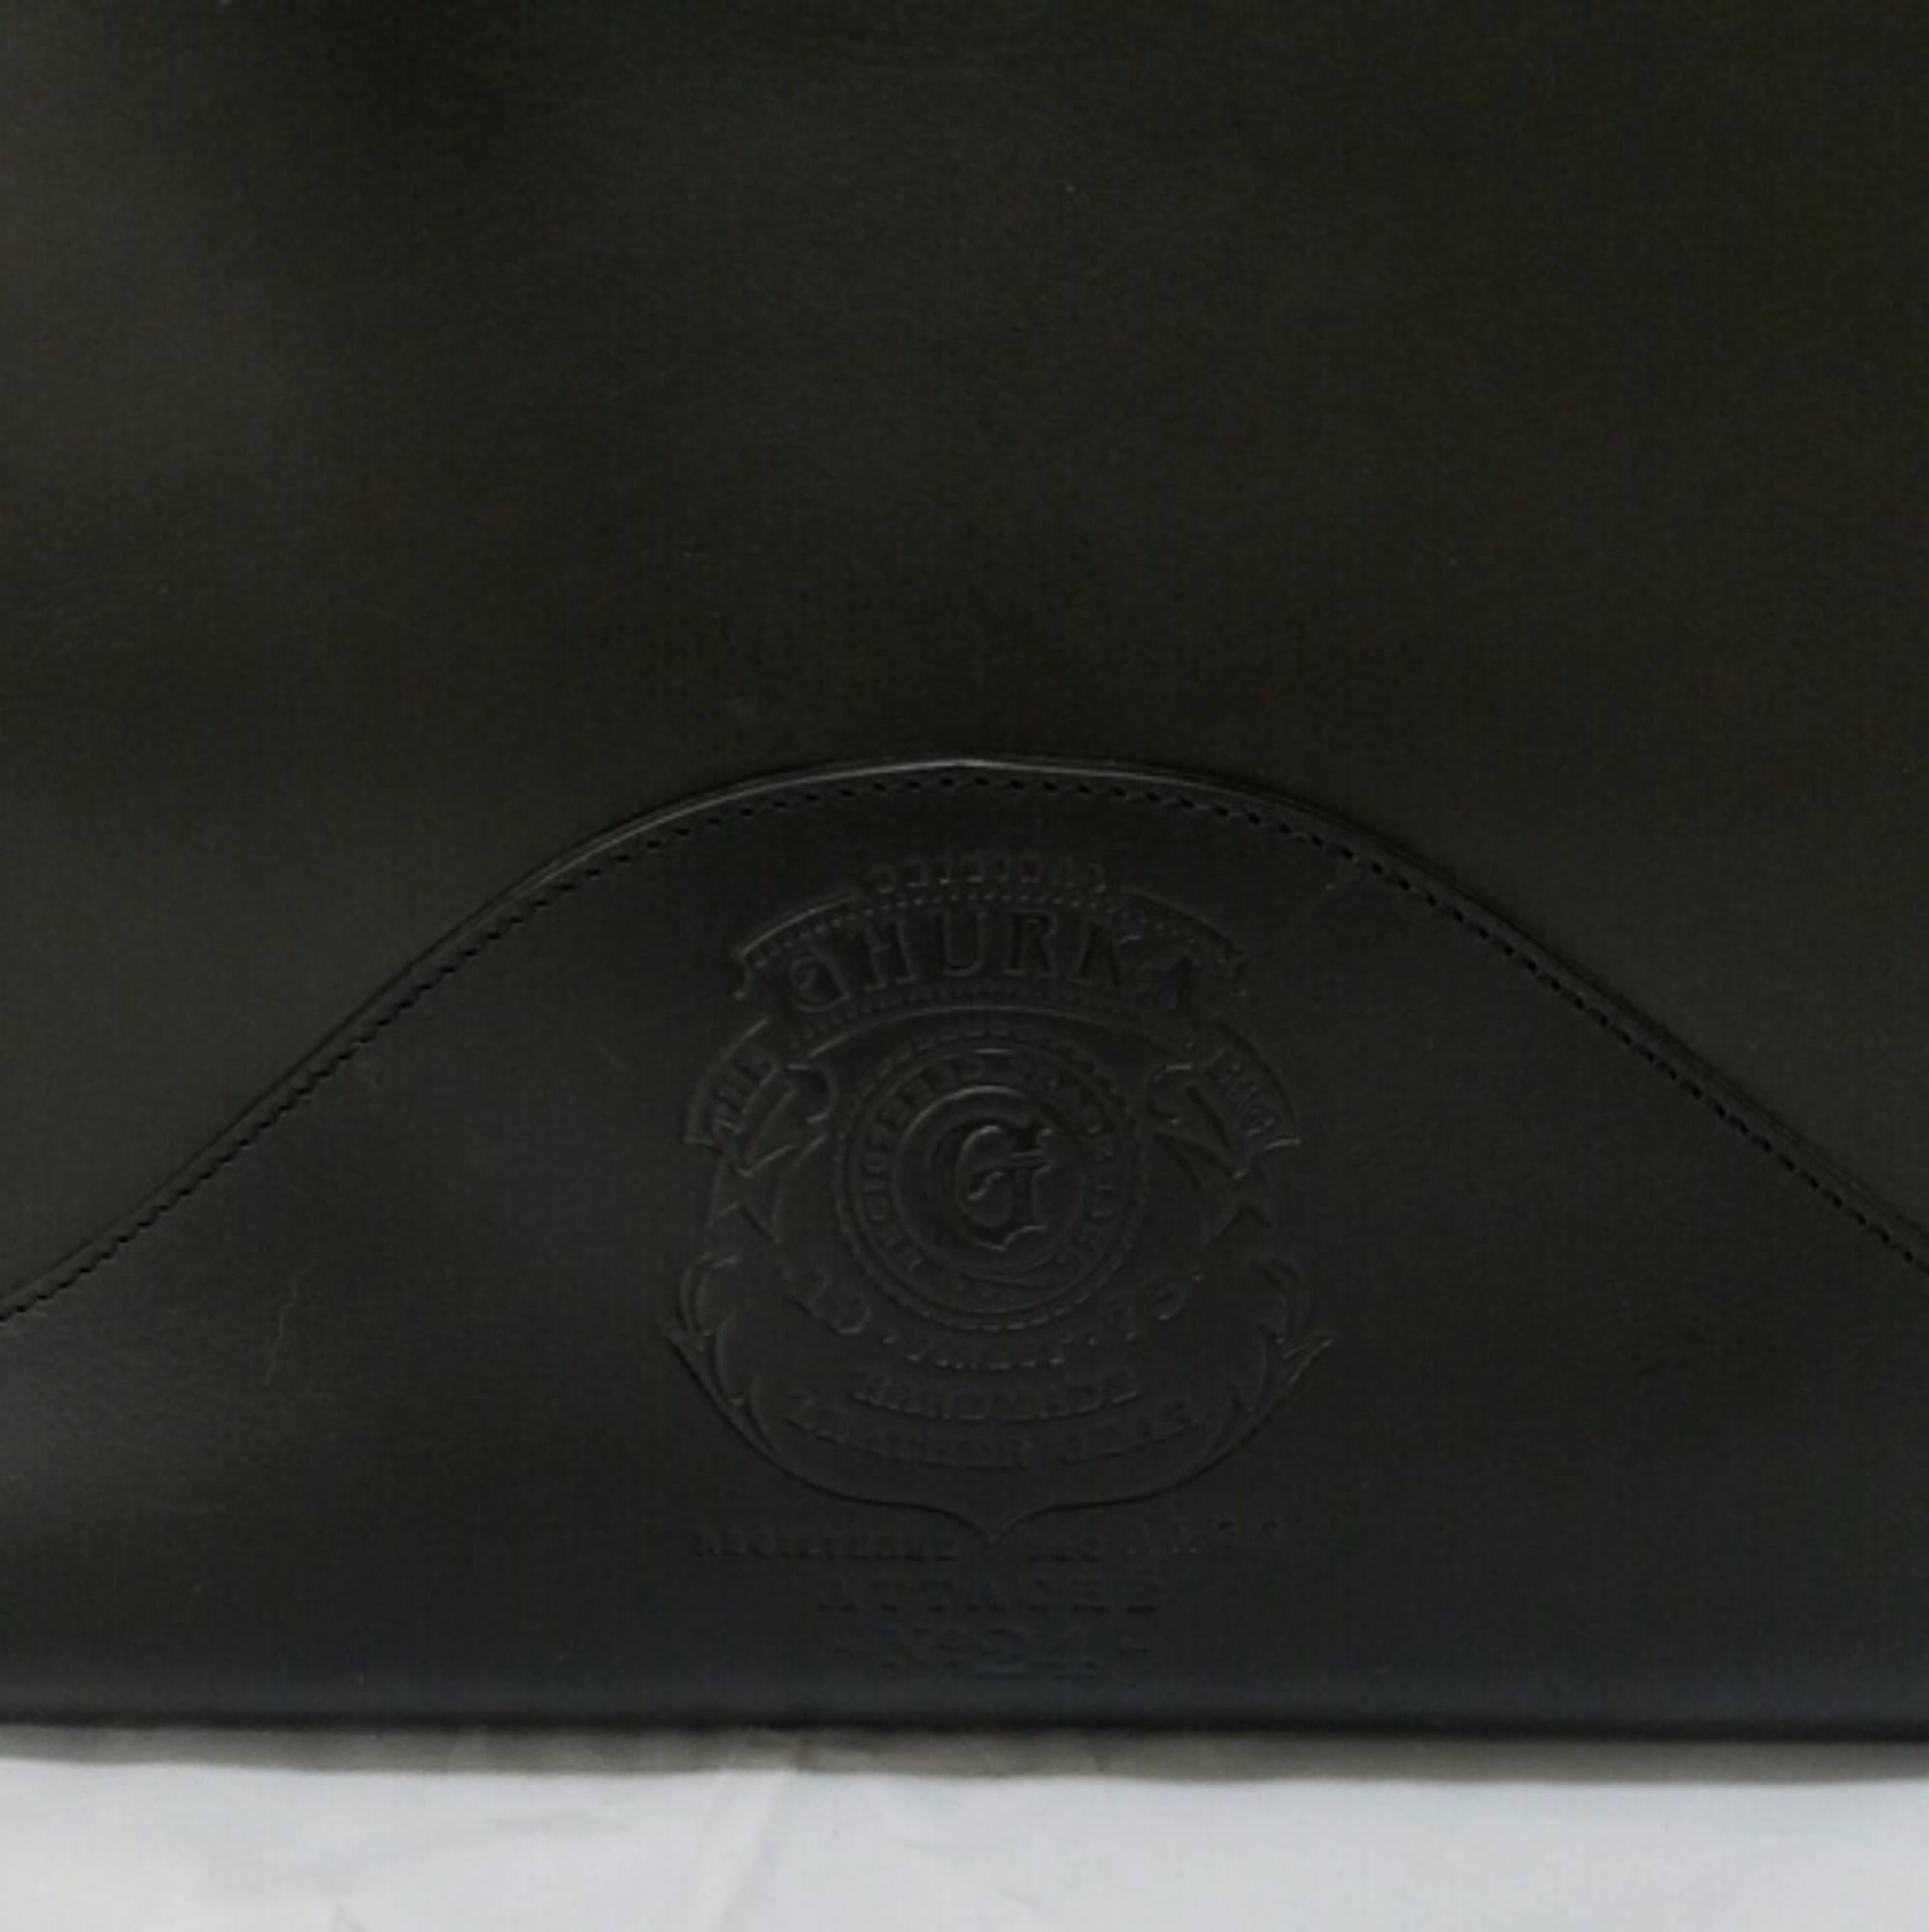 Men's Ghurka Attache No. 24 Leather Portfolio Briefcase (Black, Size - 16